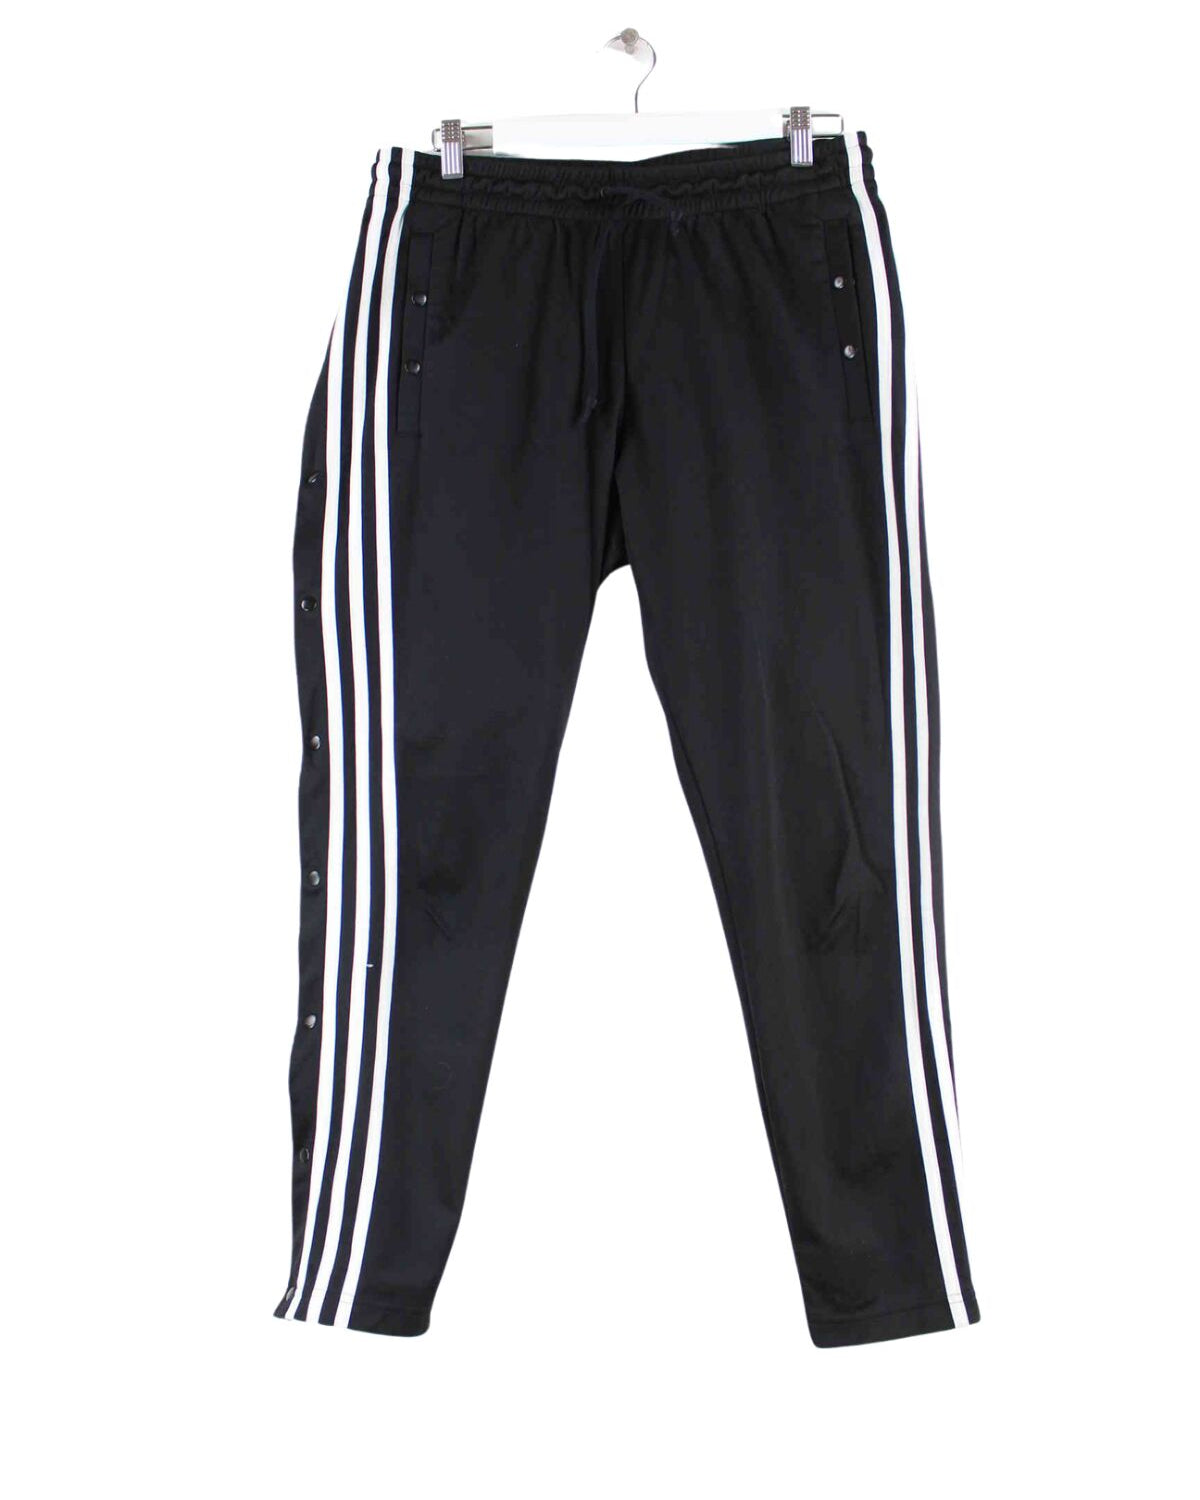 Adidas 3-Stripes Knopf Track Pants Schwarz S (front image)